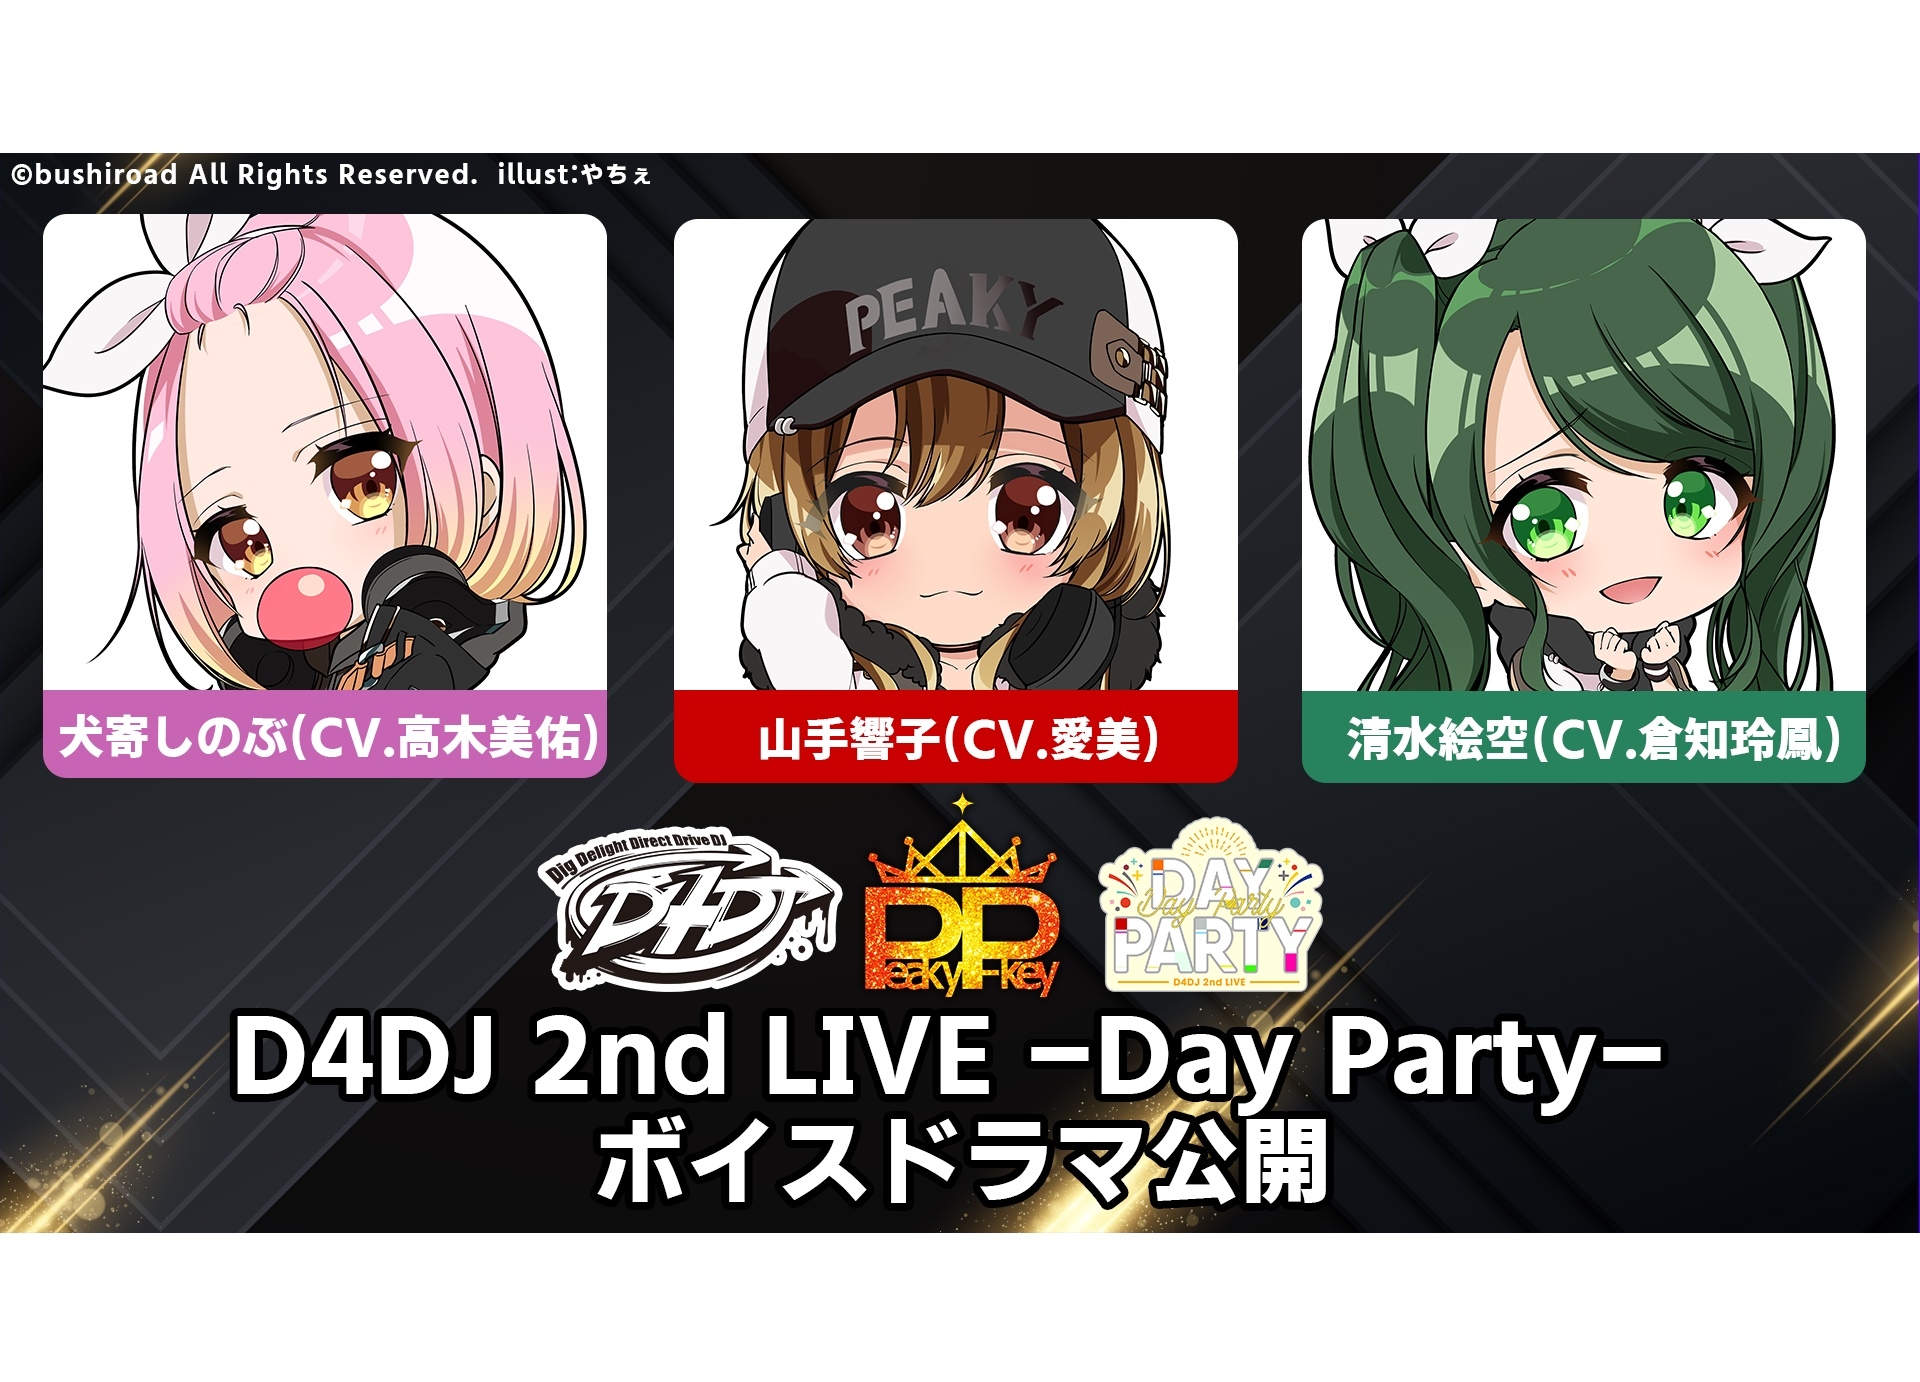 「D4DJ 2nd LIVE Peaky P-key ミニボイスドラマ」公開